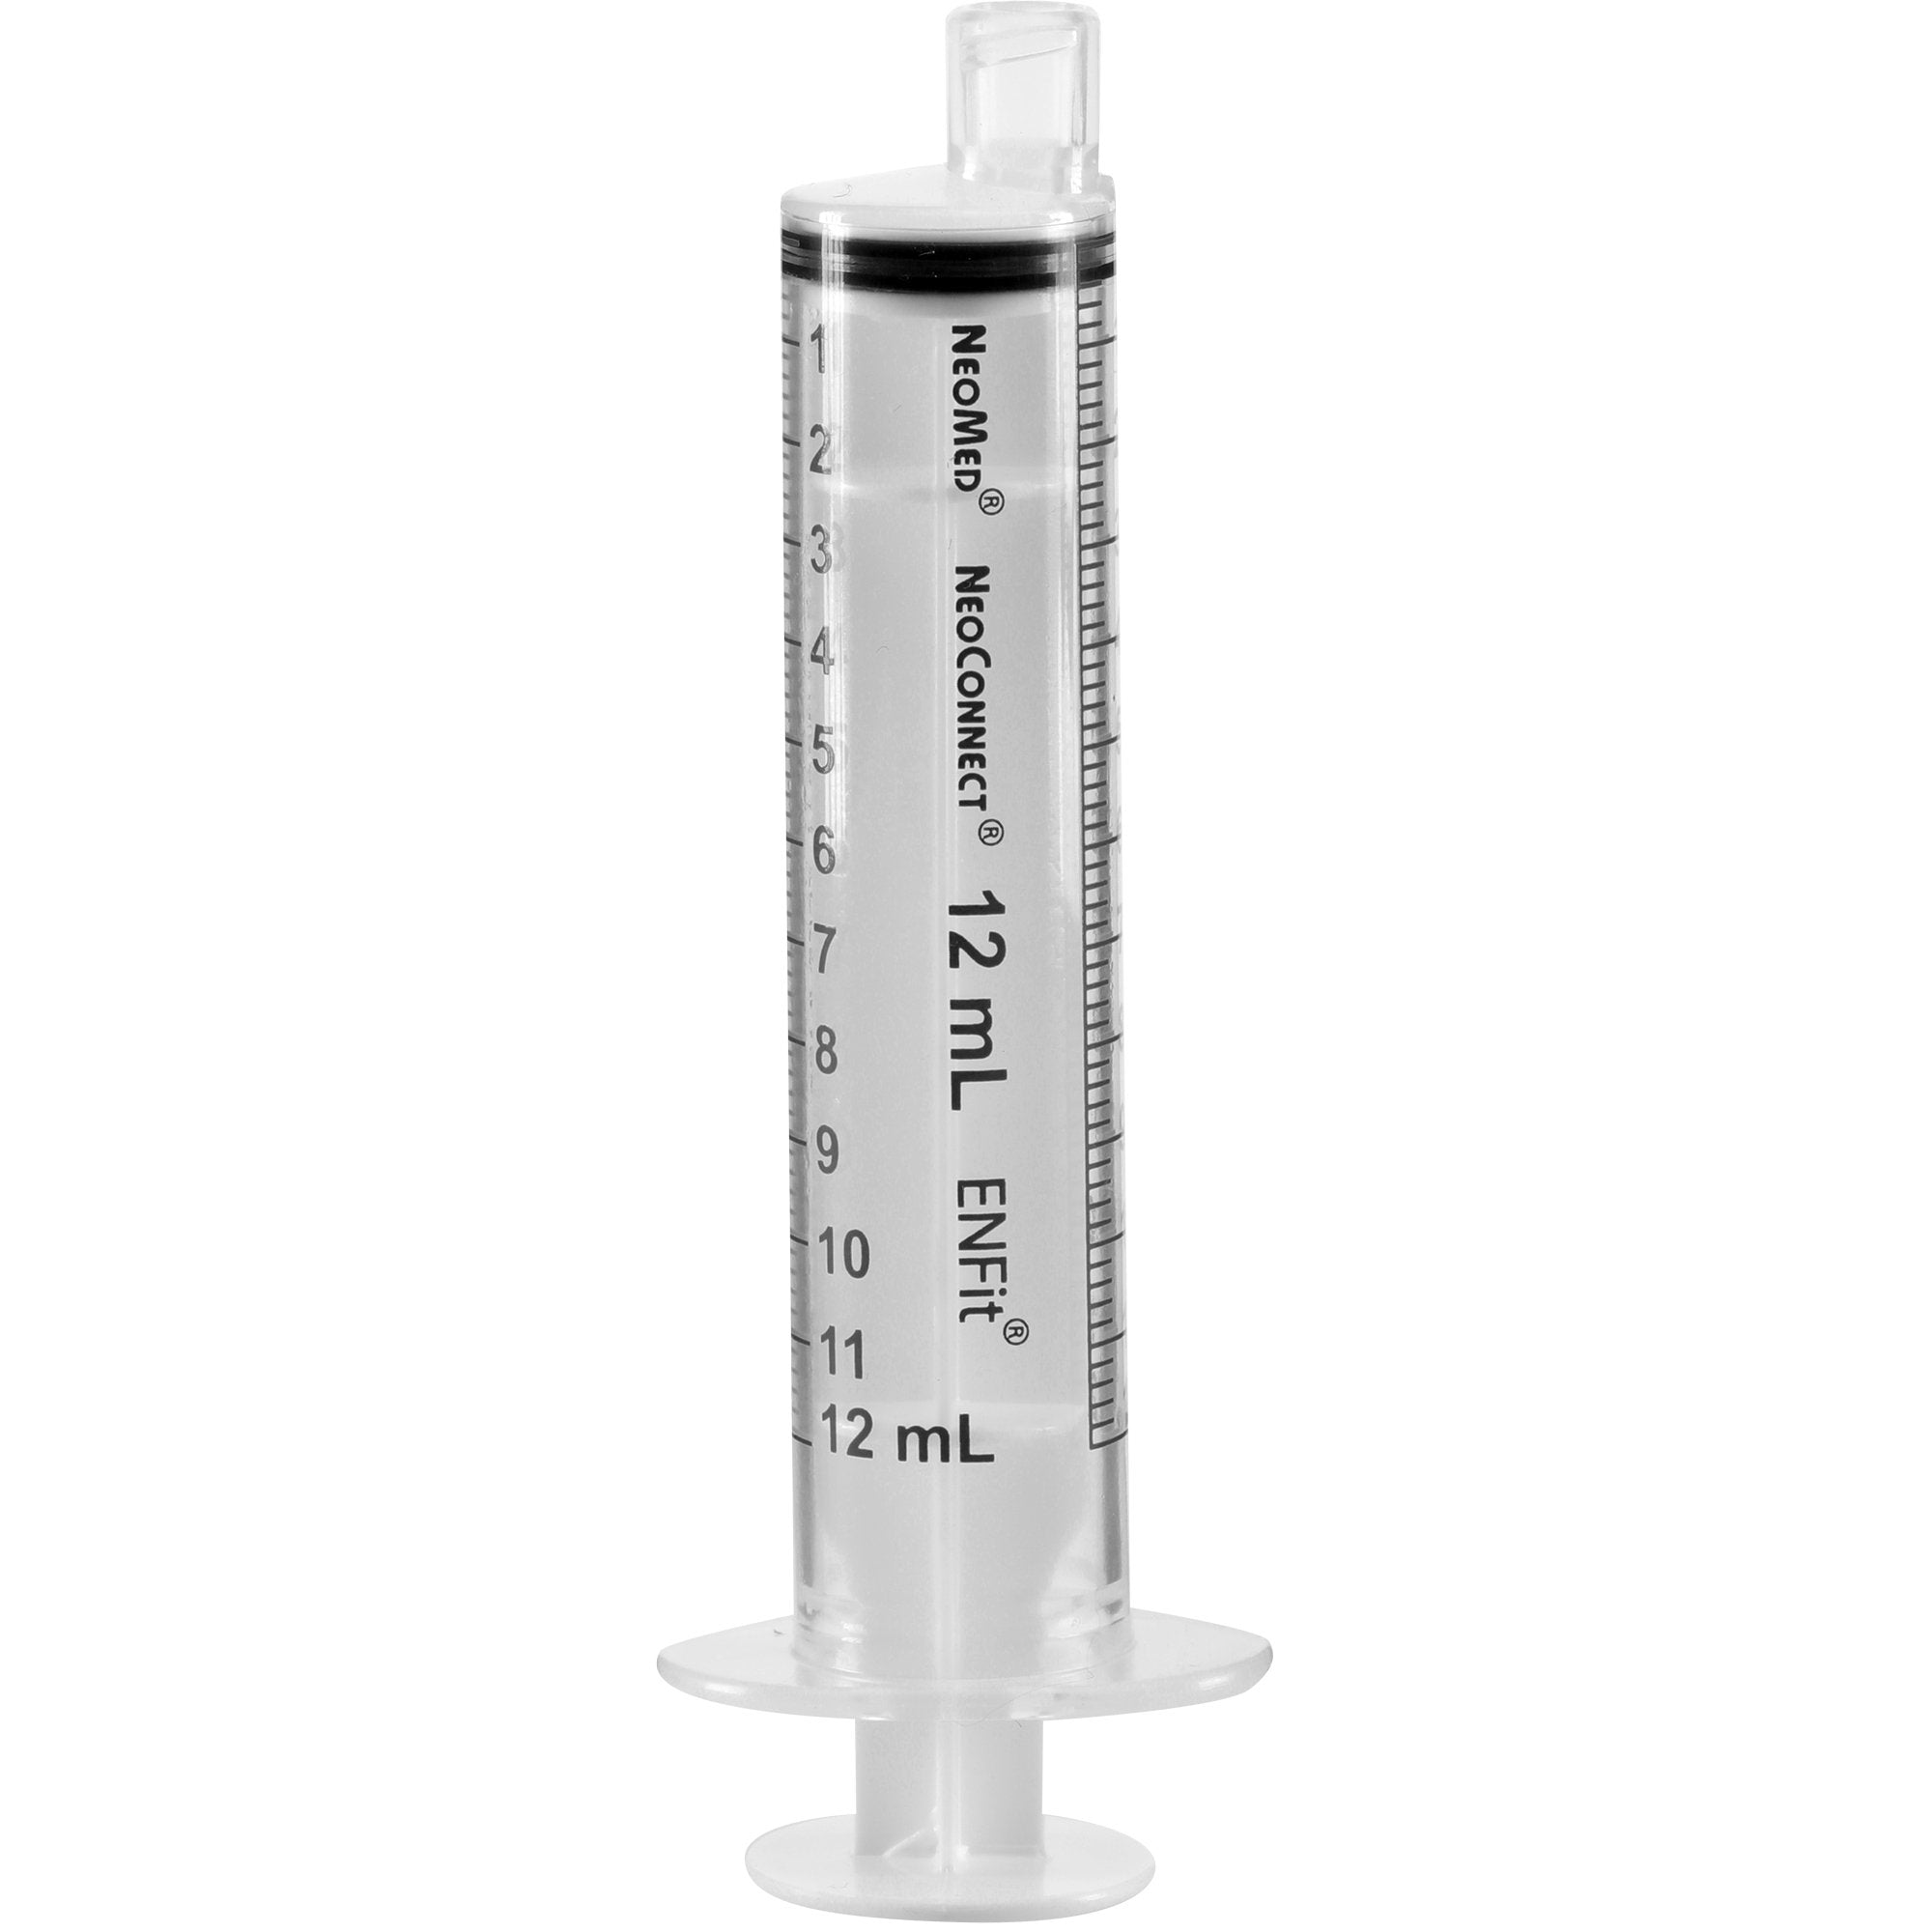 Oral Medication Syringe NeoConnect® at home™ 12 mL Enfit Tip Without Safety